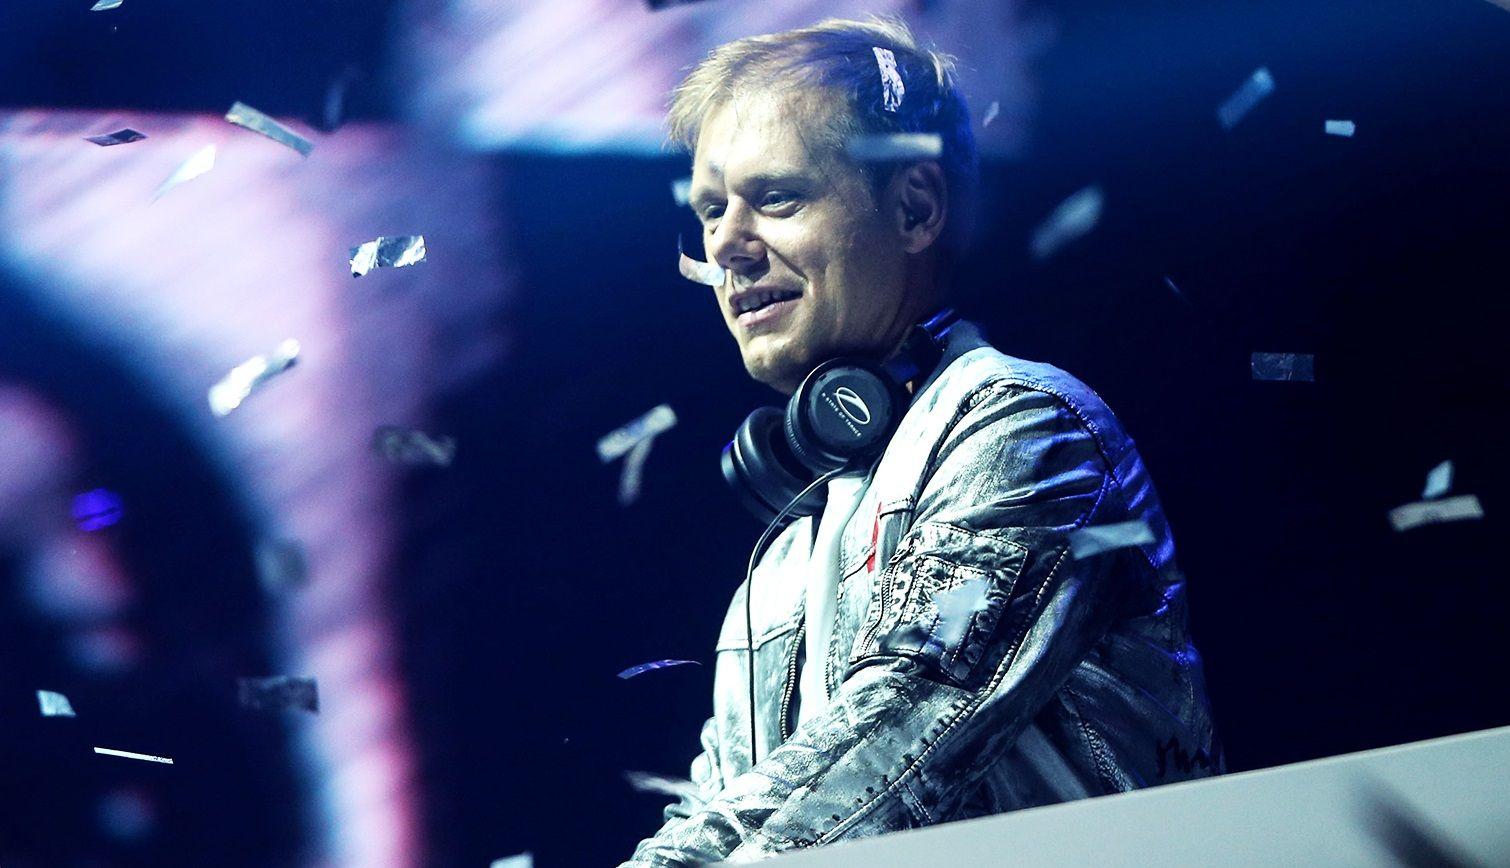 Armin van Buuren shines at ASOT 850 Festival, drops official double